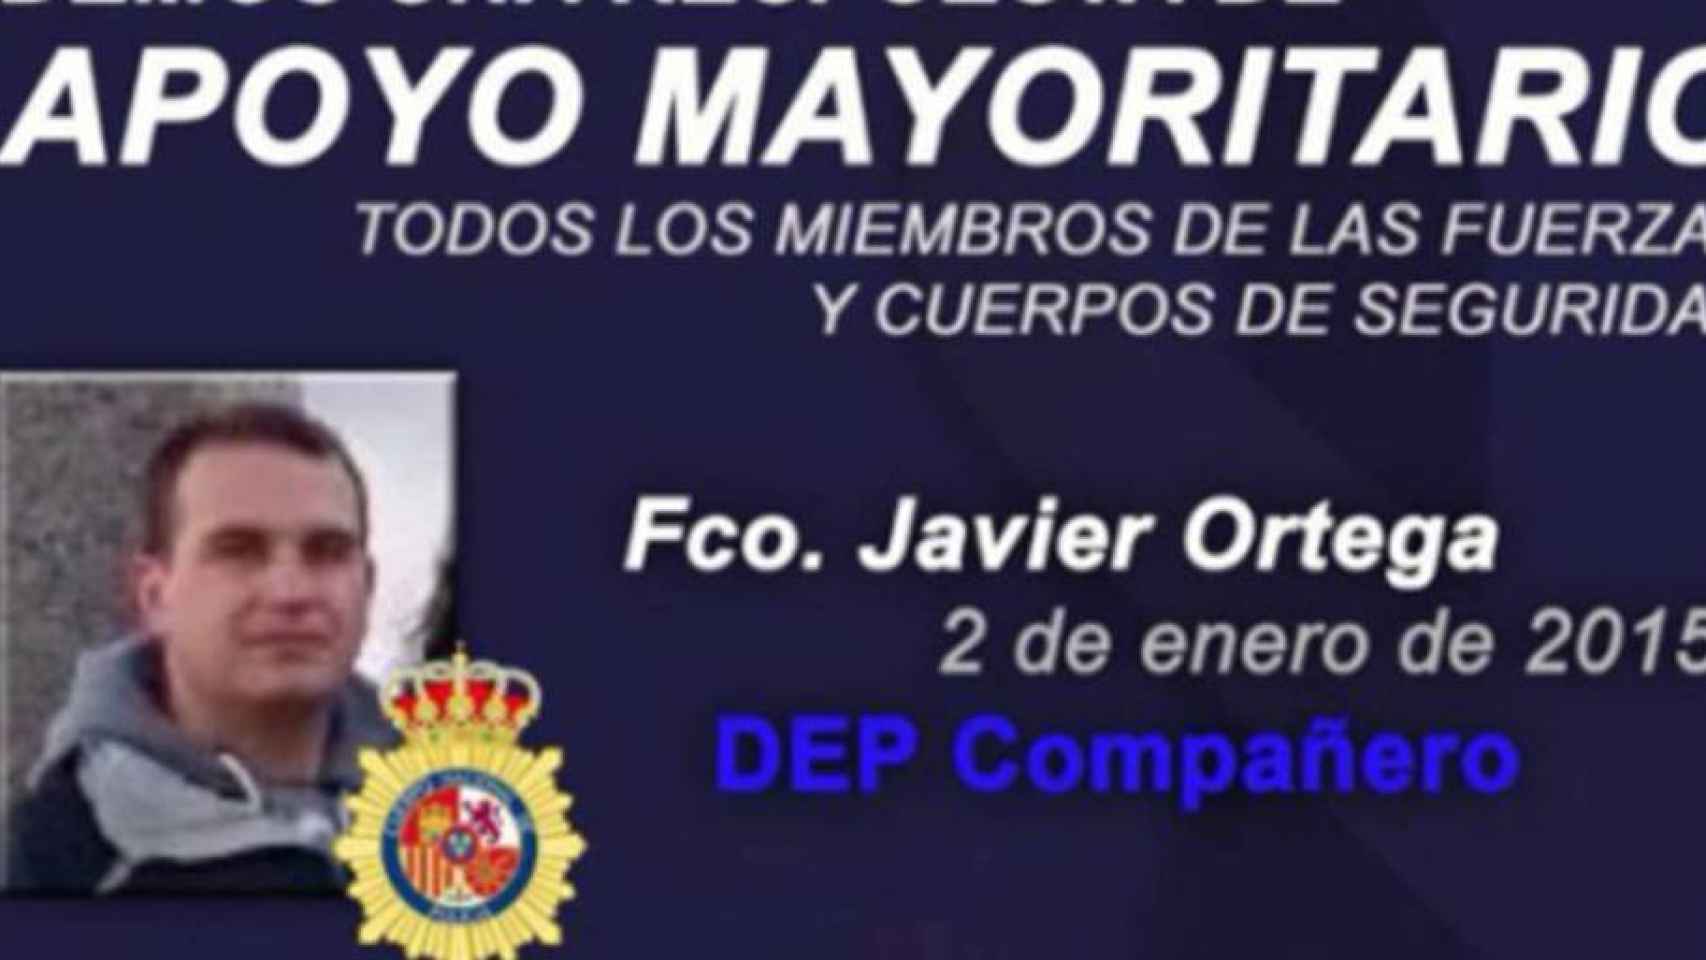 Despedida de Francisco Javier Ortega.